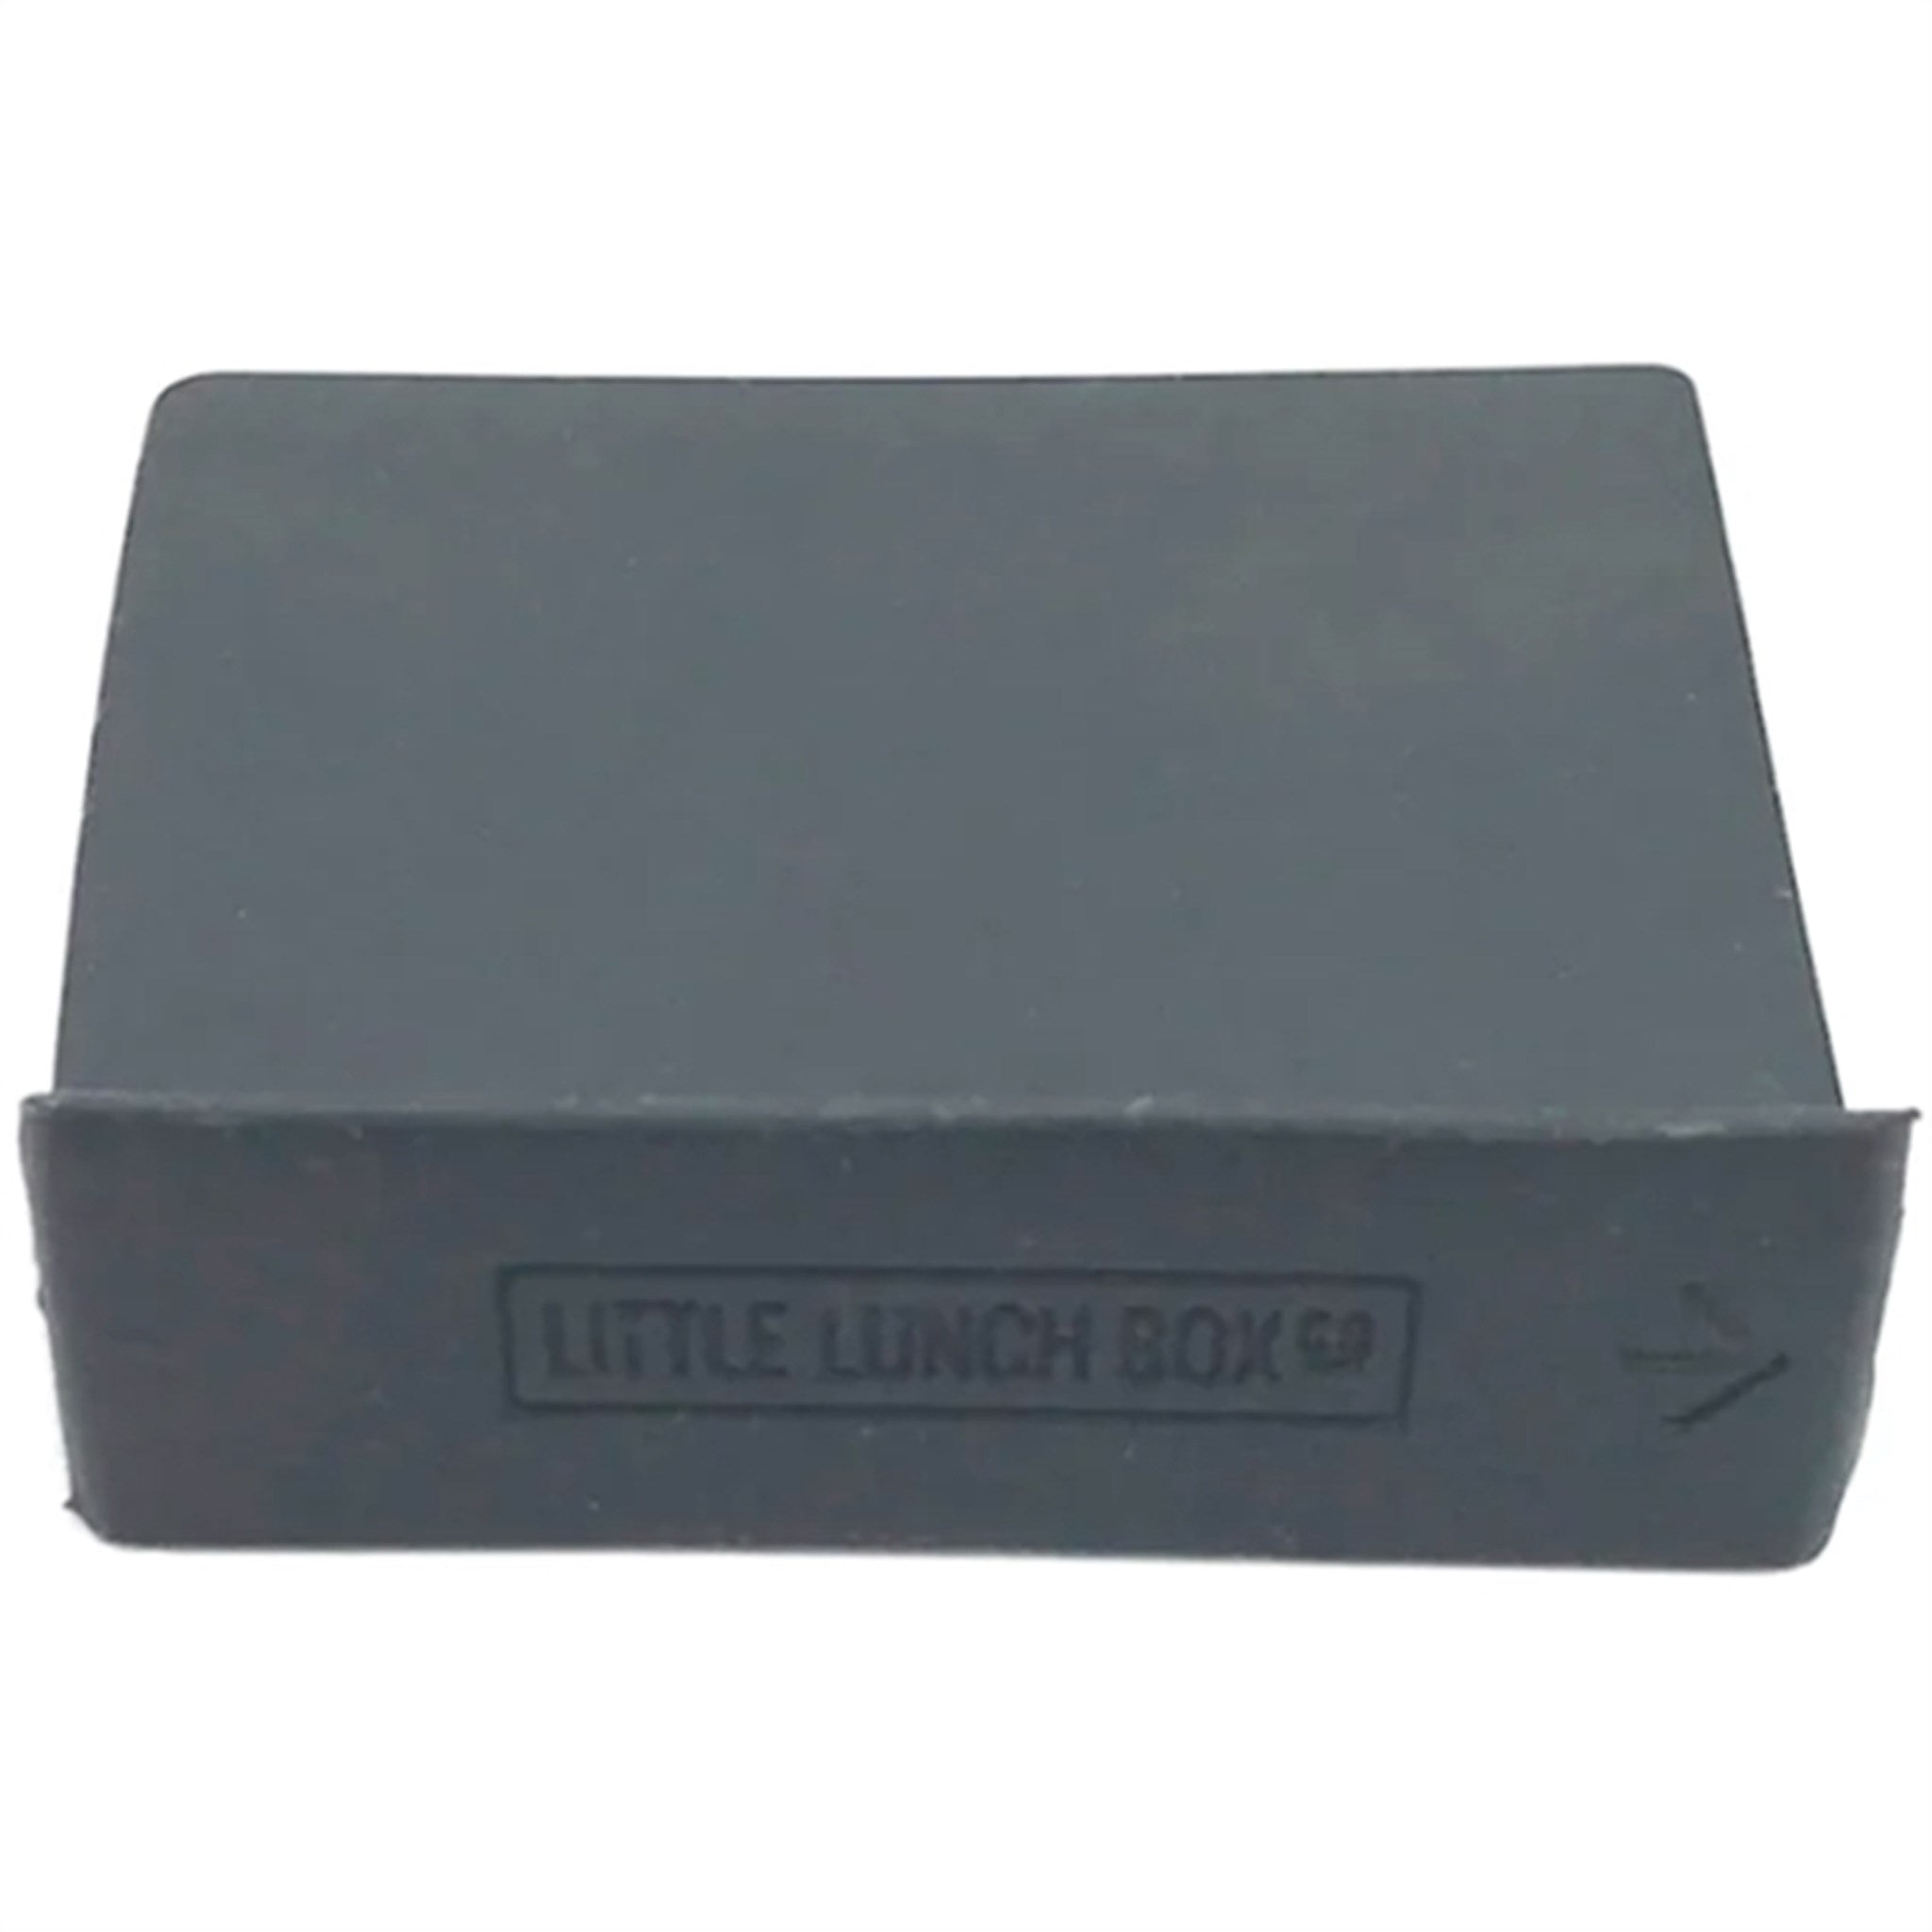 Little Lunch Box Co Bento 2/5 Rumdeler Dark Grey Construction